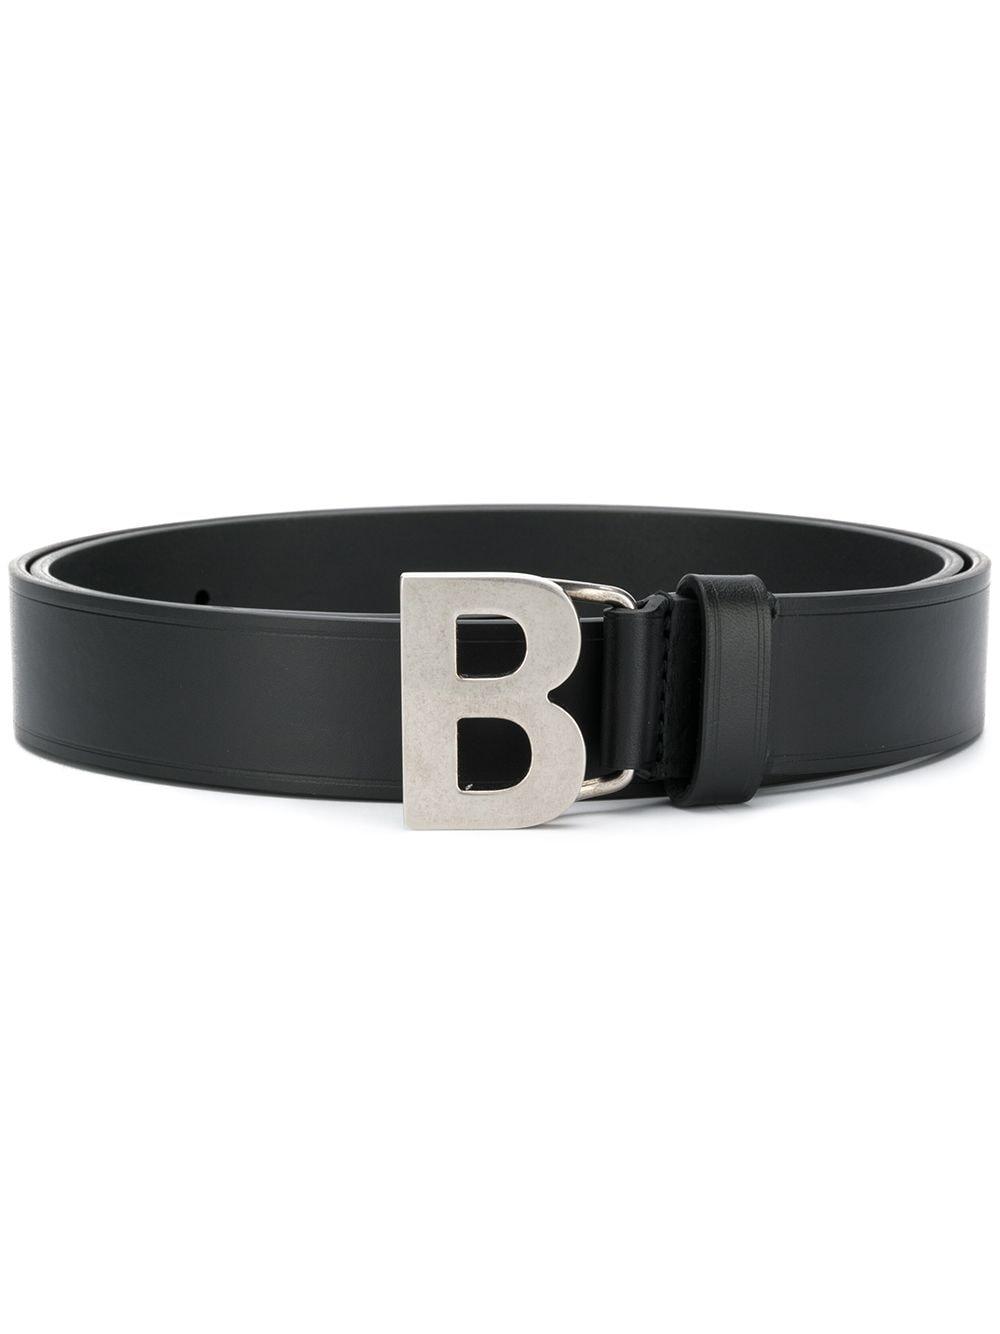 Balenciaga B Buckle Leather Belt in Black for Men | Lyst